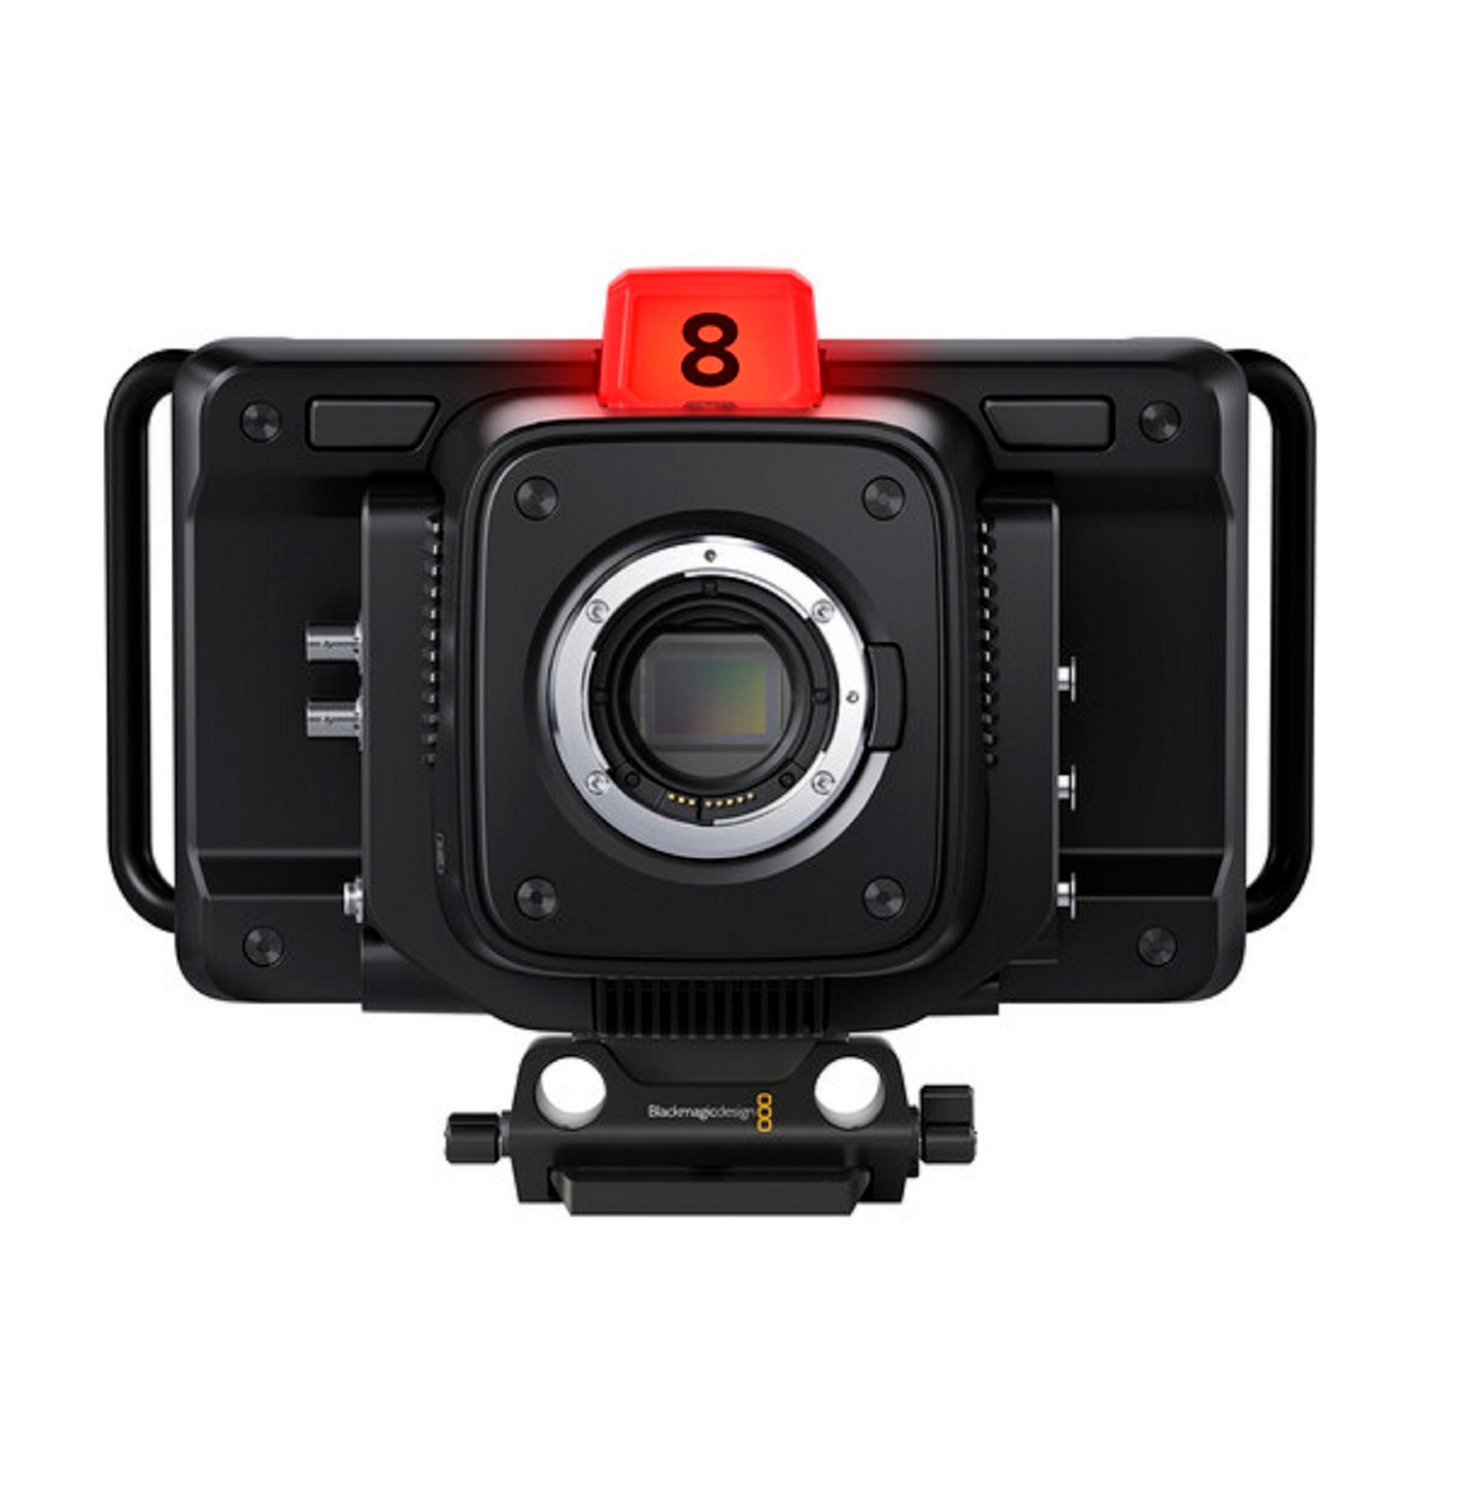 Blackmagic Design Studio Camera 6K Pro Capture up to 6K 6144 x 3456p50